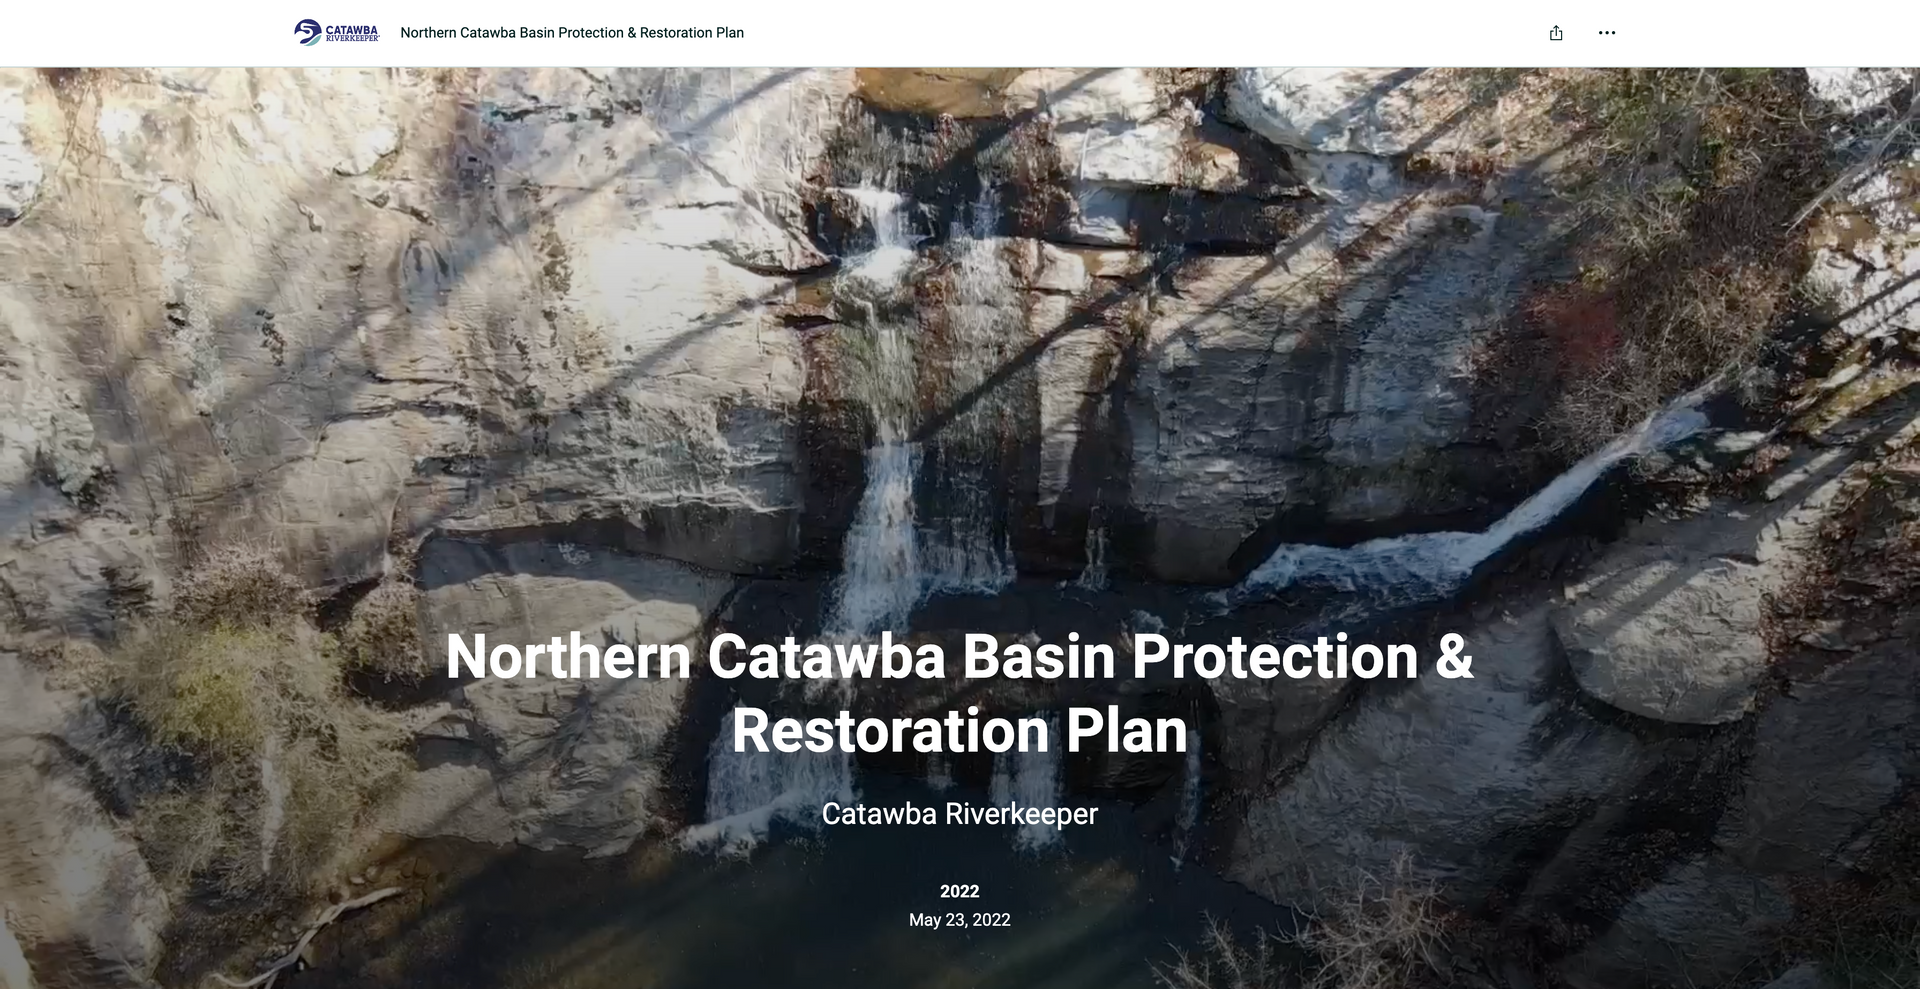 The Catawba Riverkeeper, Northern Catawba Basin Protection & Restoration Plan